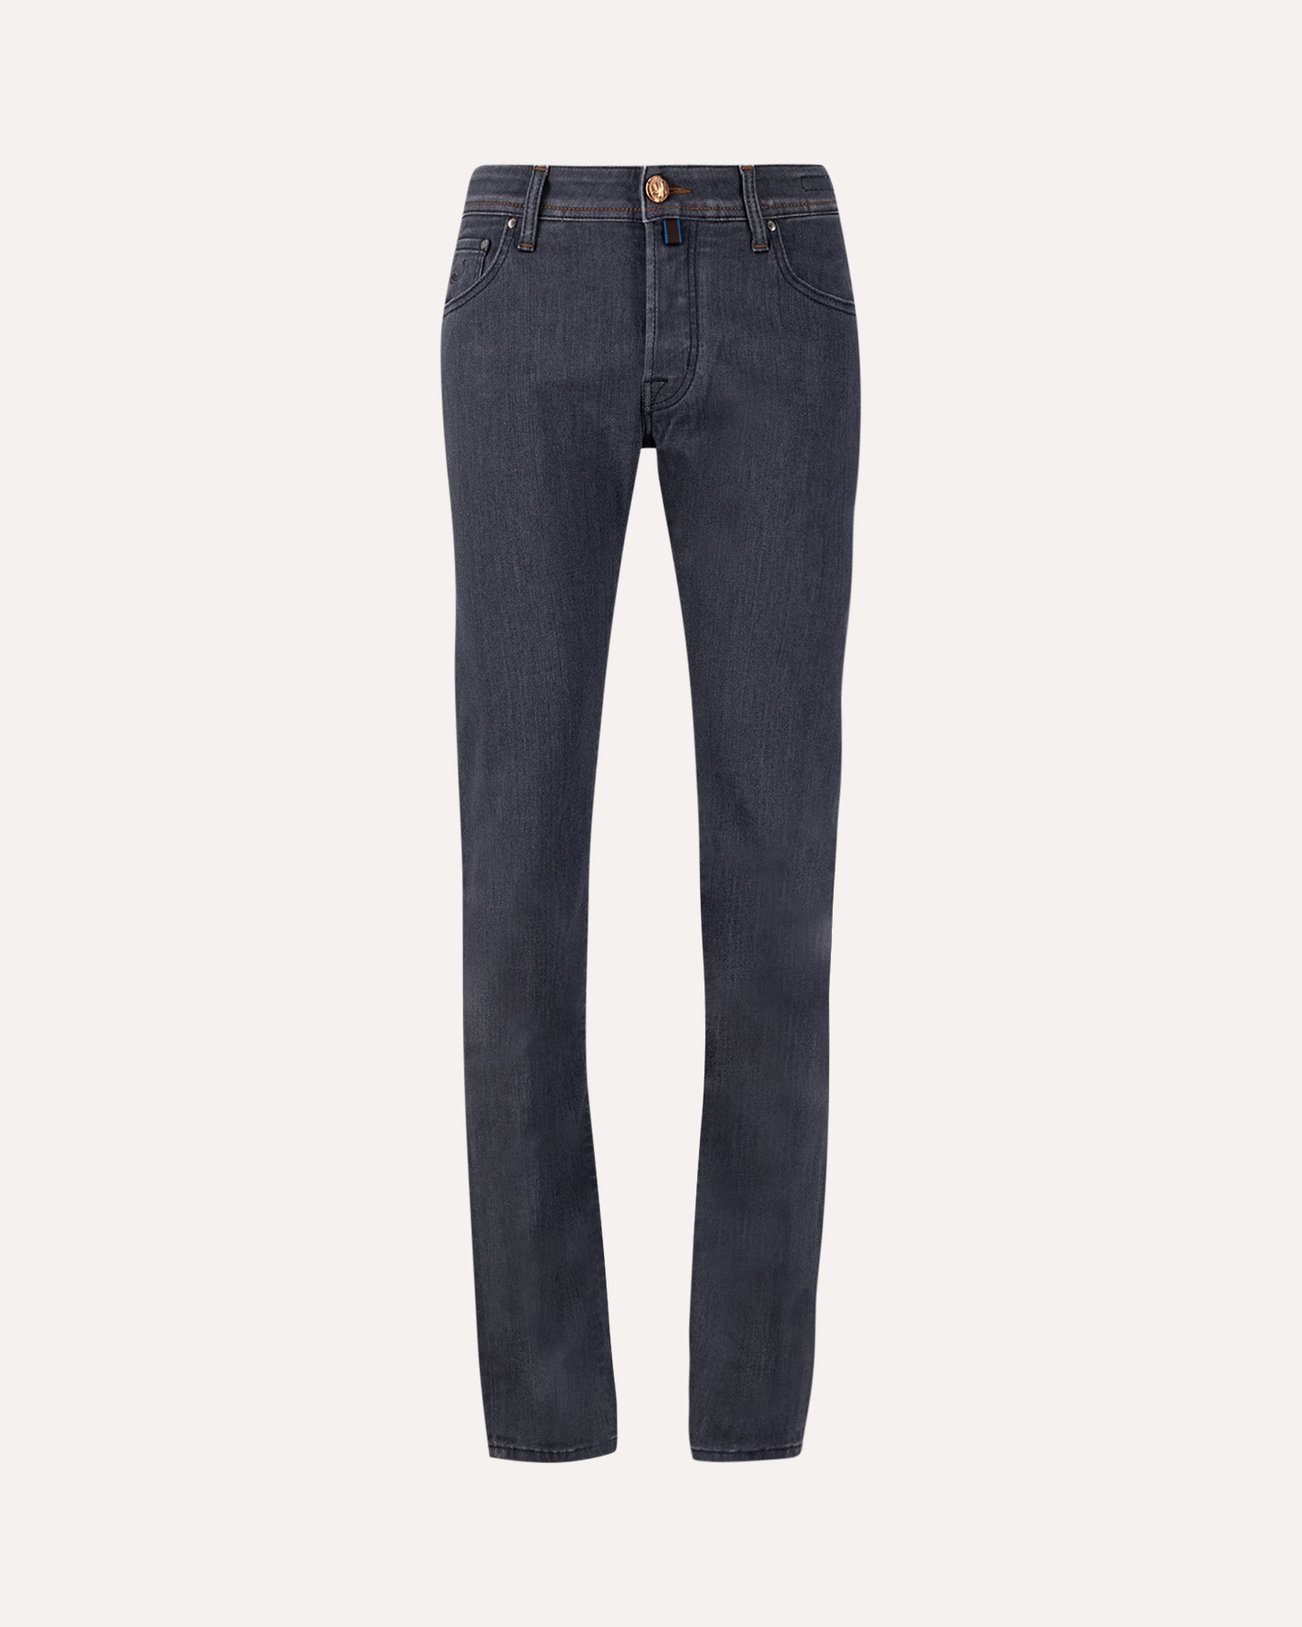 Jacob Cohen Nick Slim Dark-Grey Jeans 540D DENIM 1